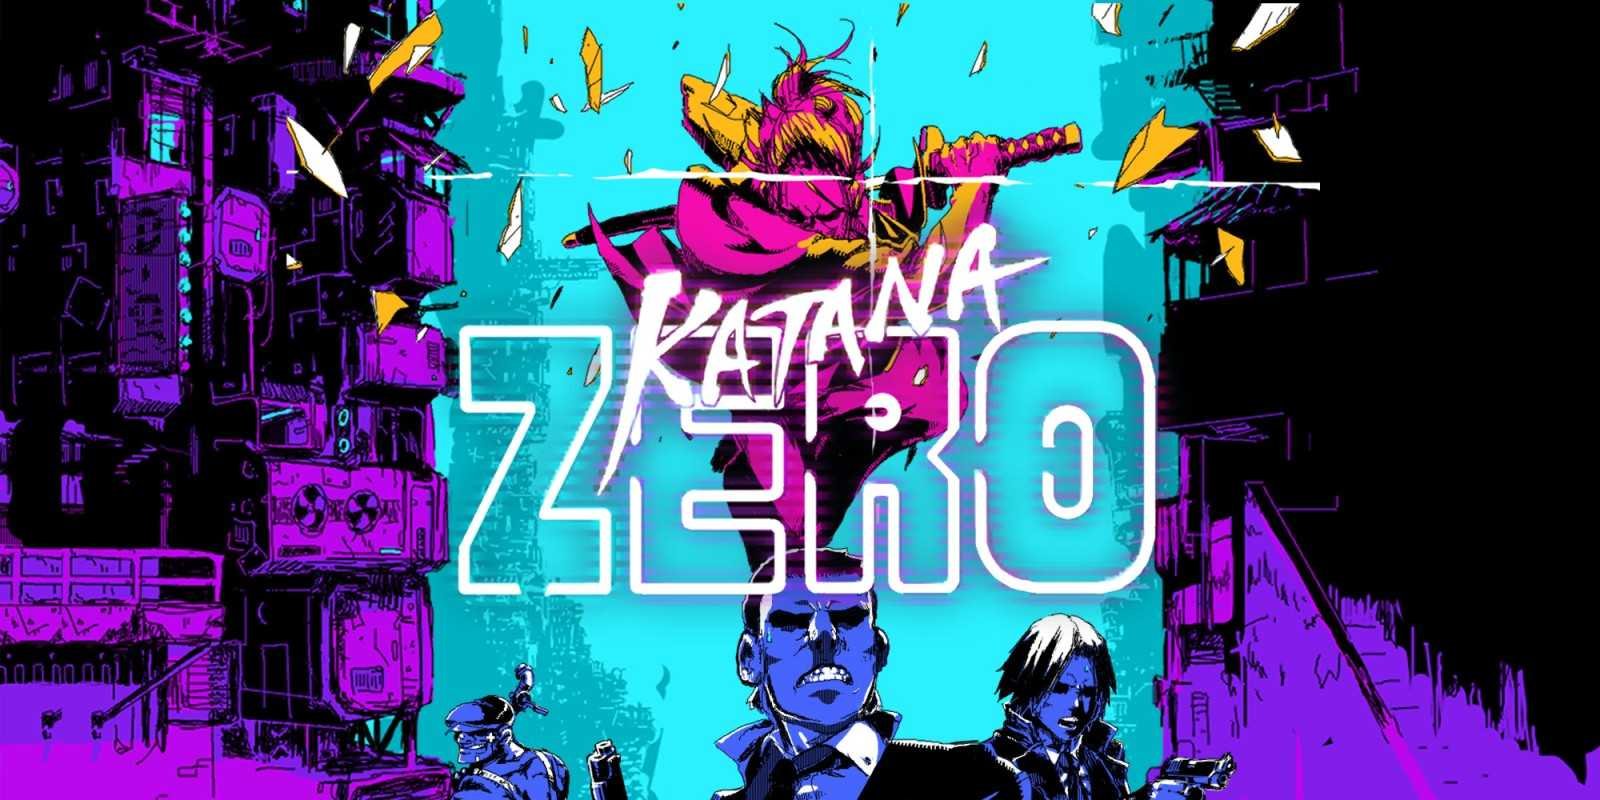 Katana ZERO: novità sul DLC gratuito